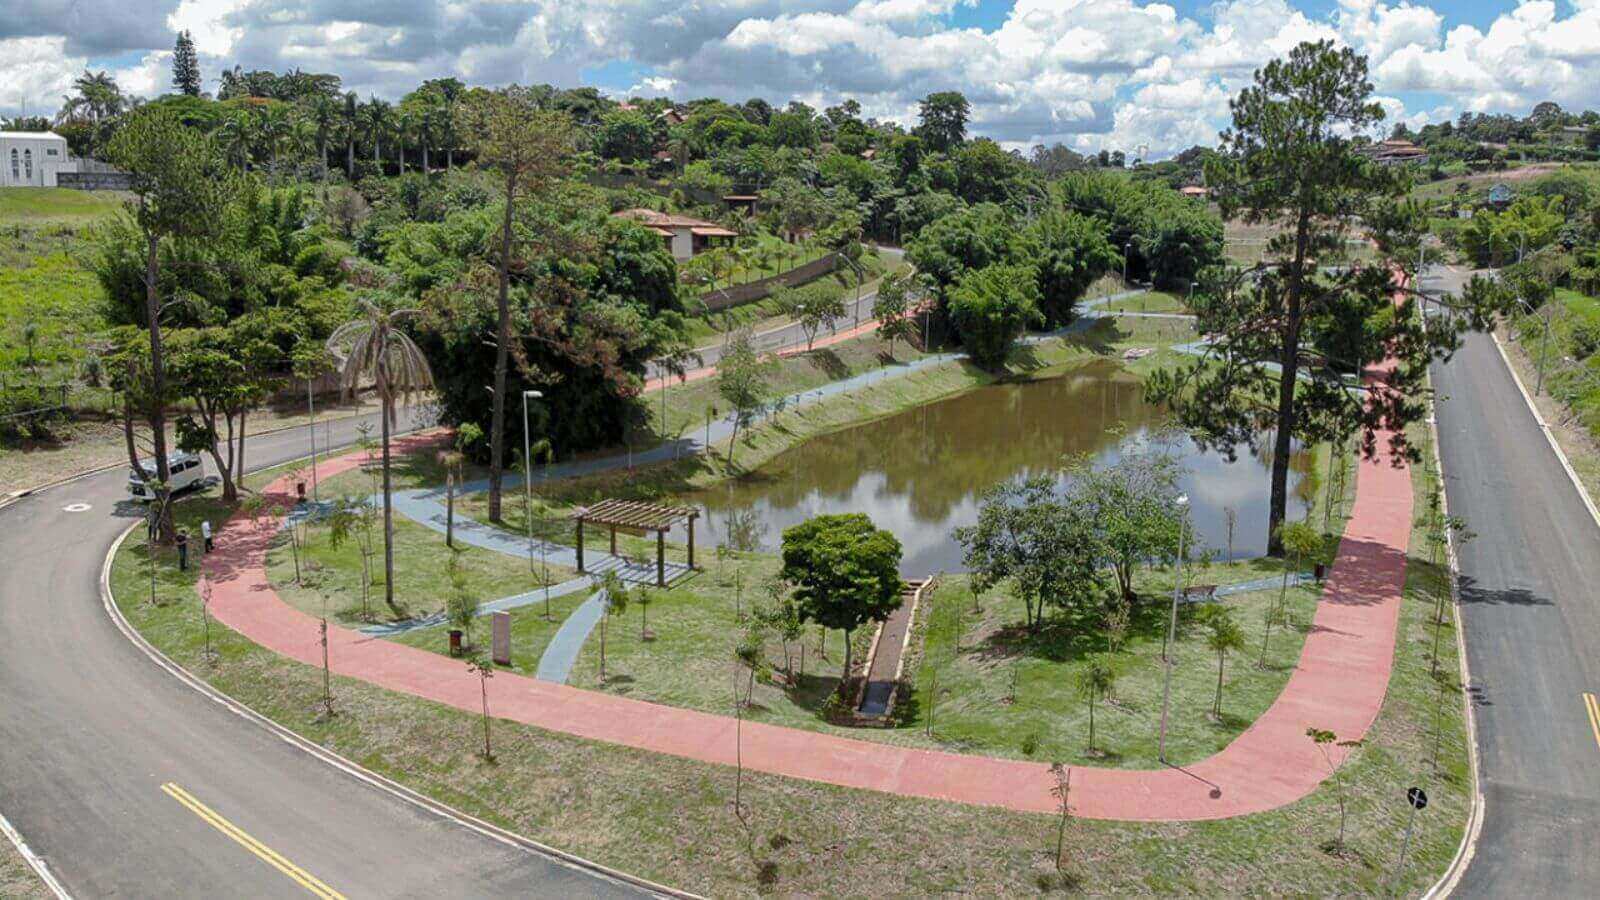 Parque Urbano do Mato Dentro